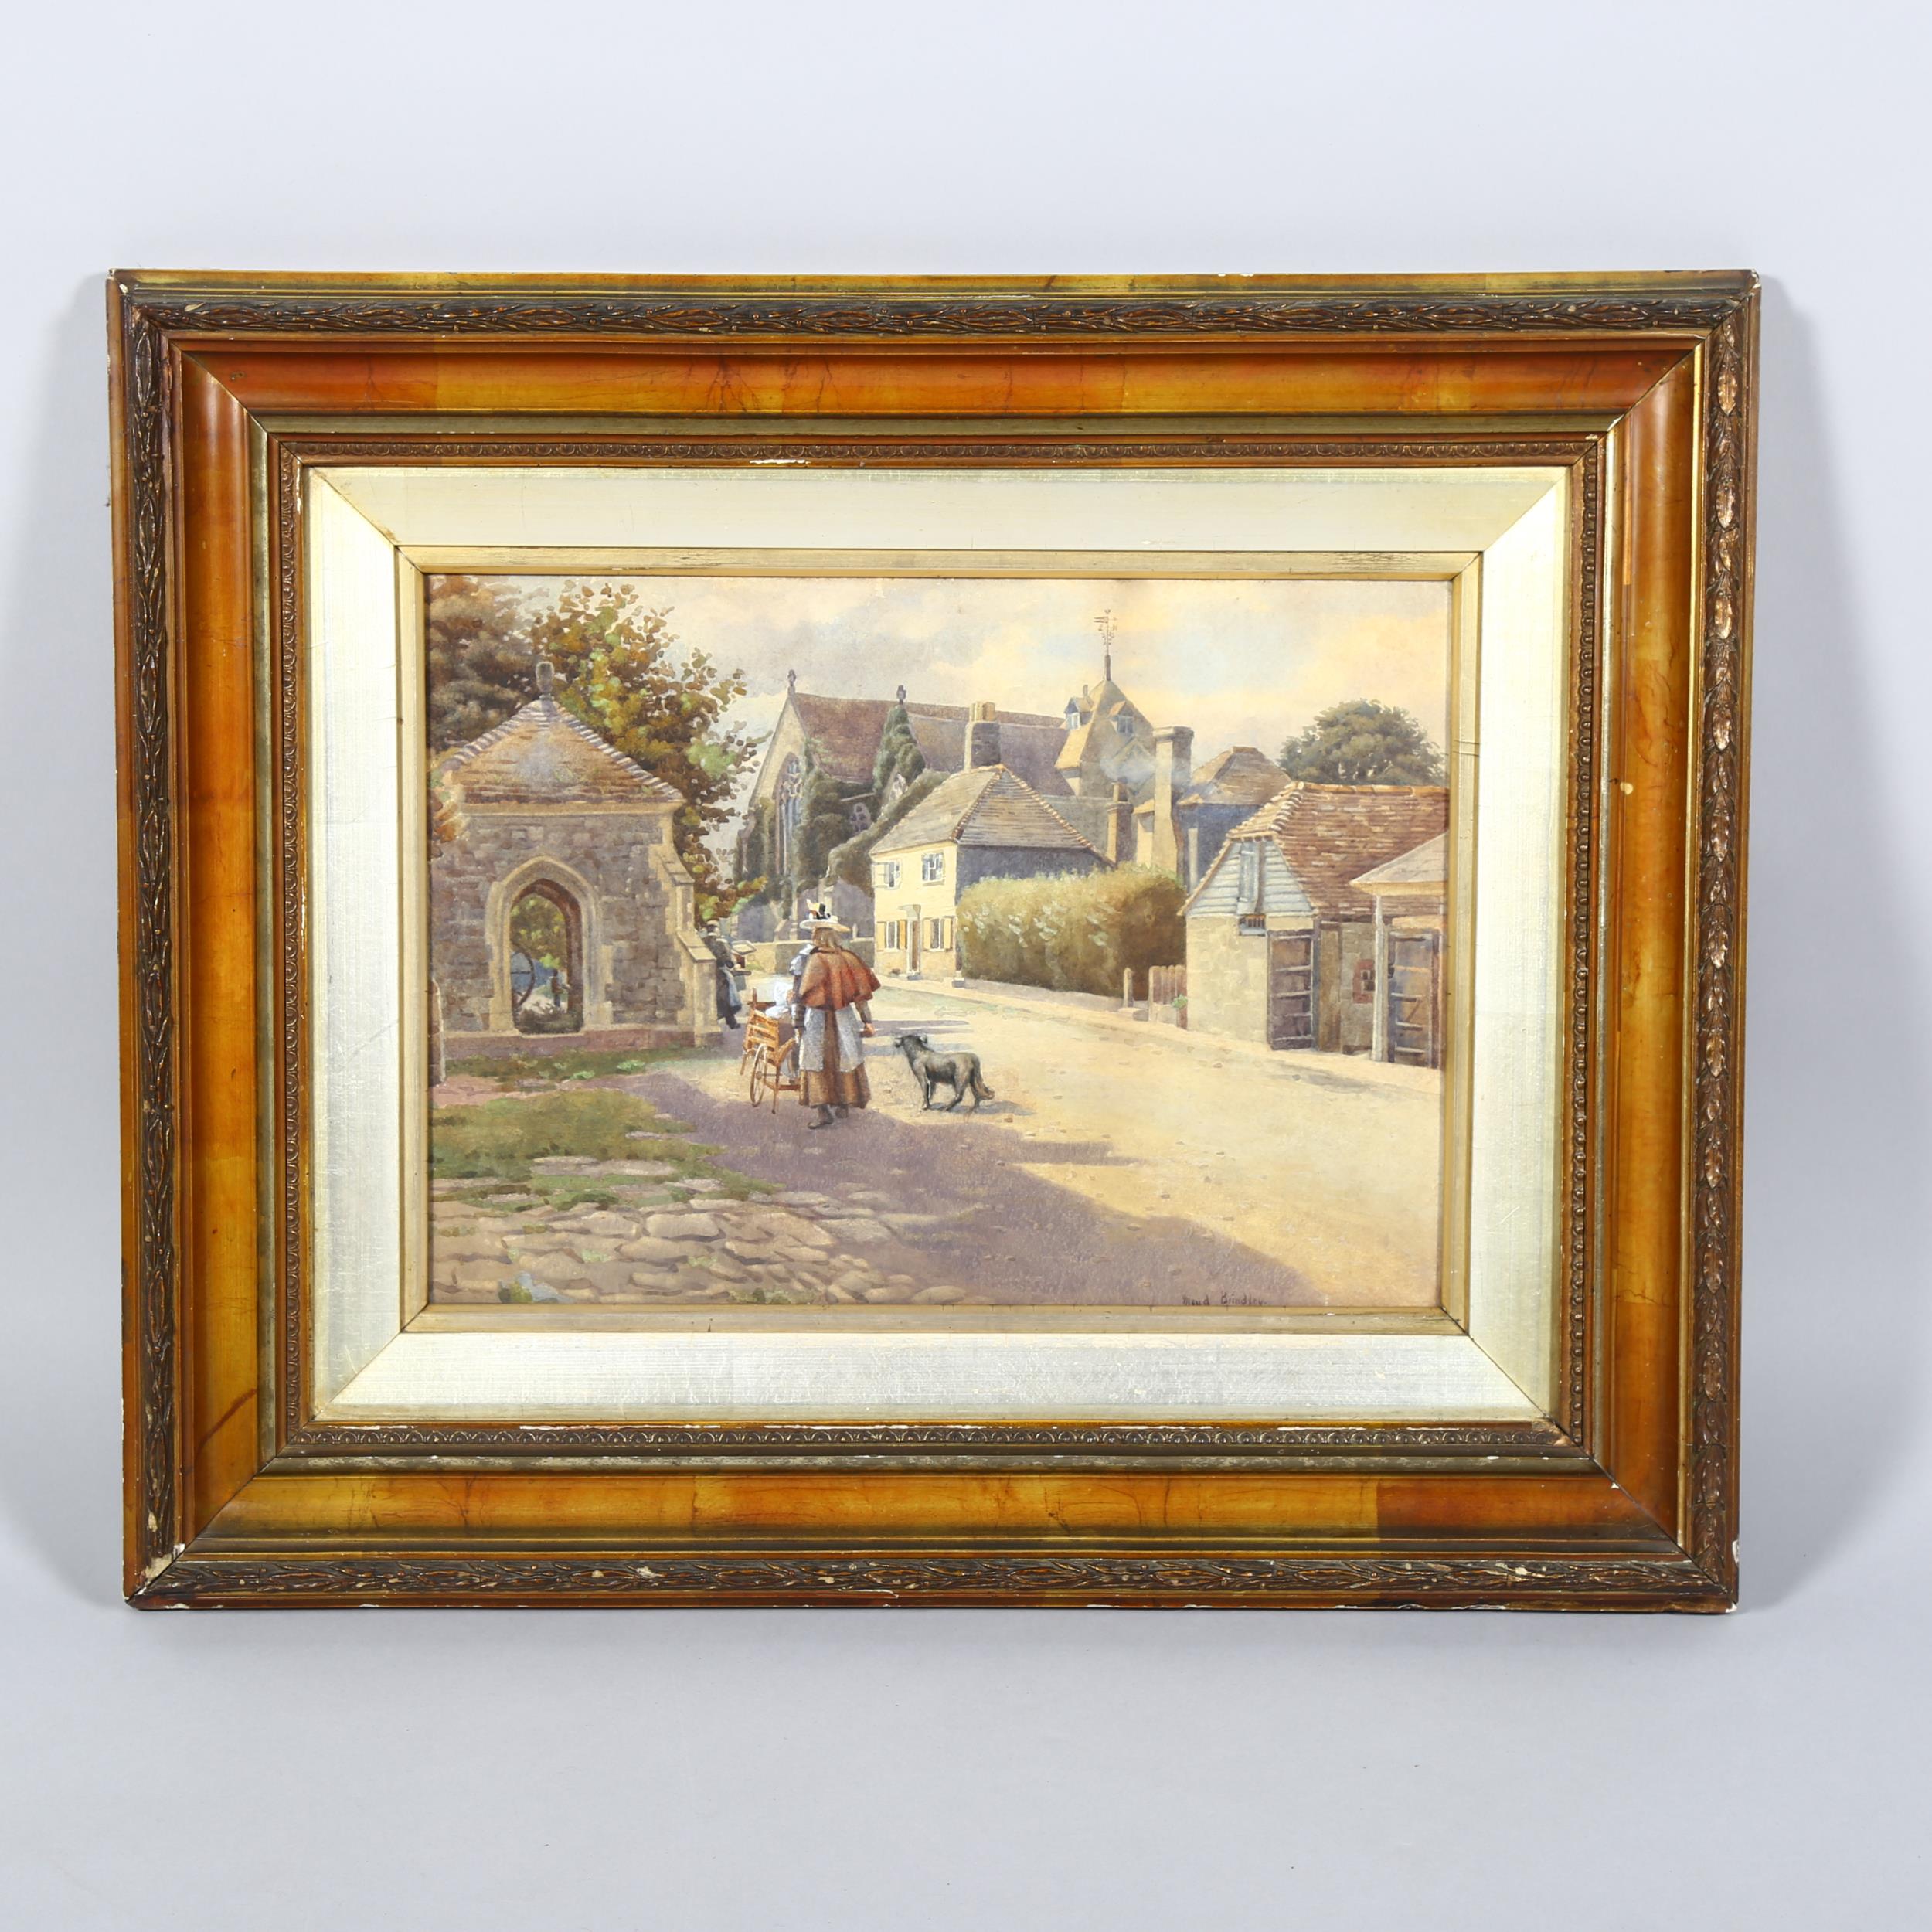 Maude Brindley, Winchelsea street scene, watercolour, signed, image 58cm x 38cm Good condition, very